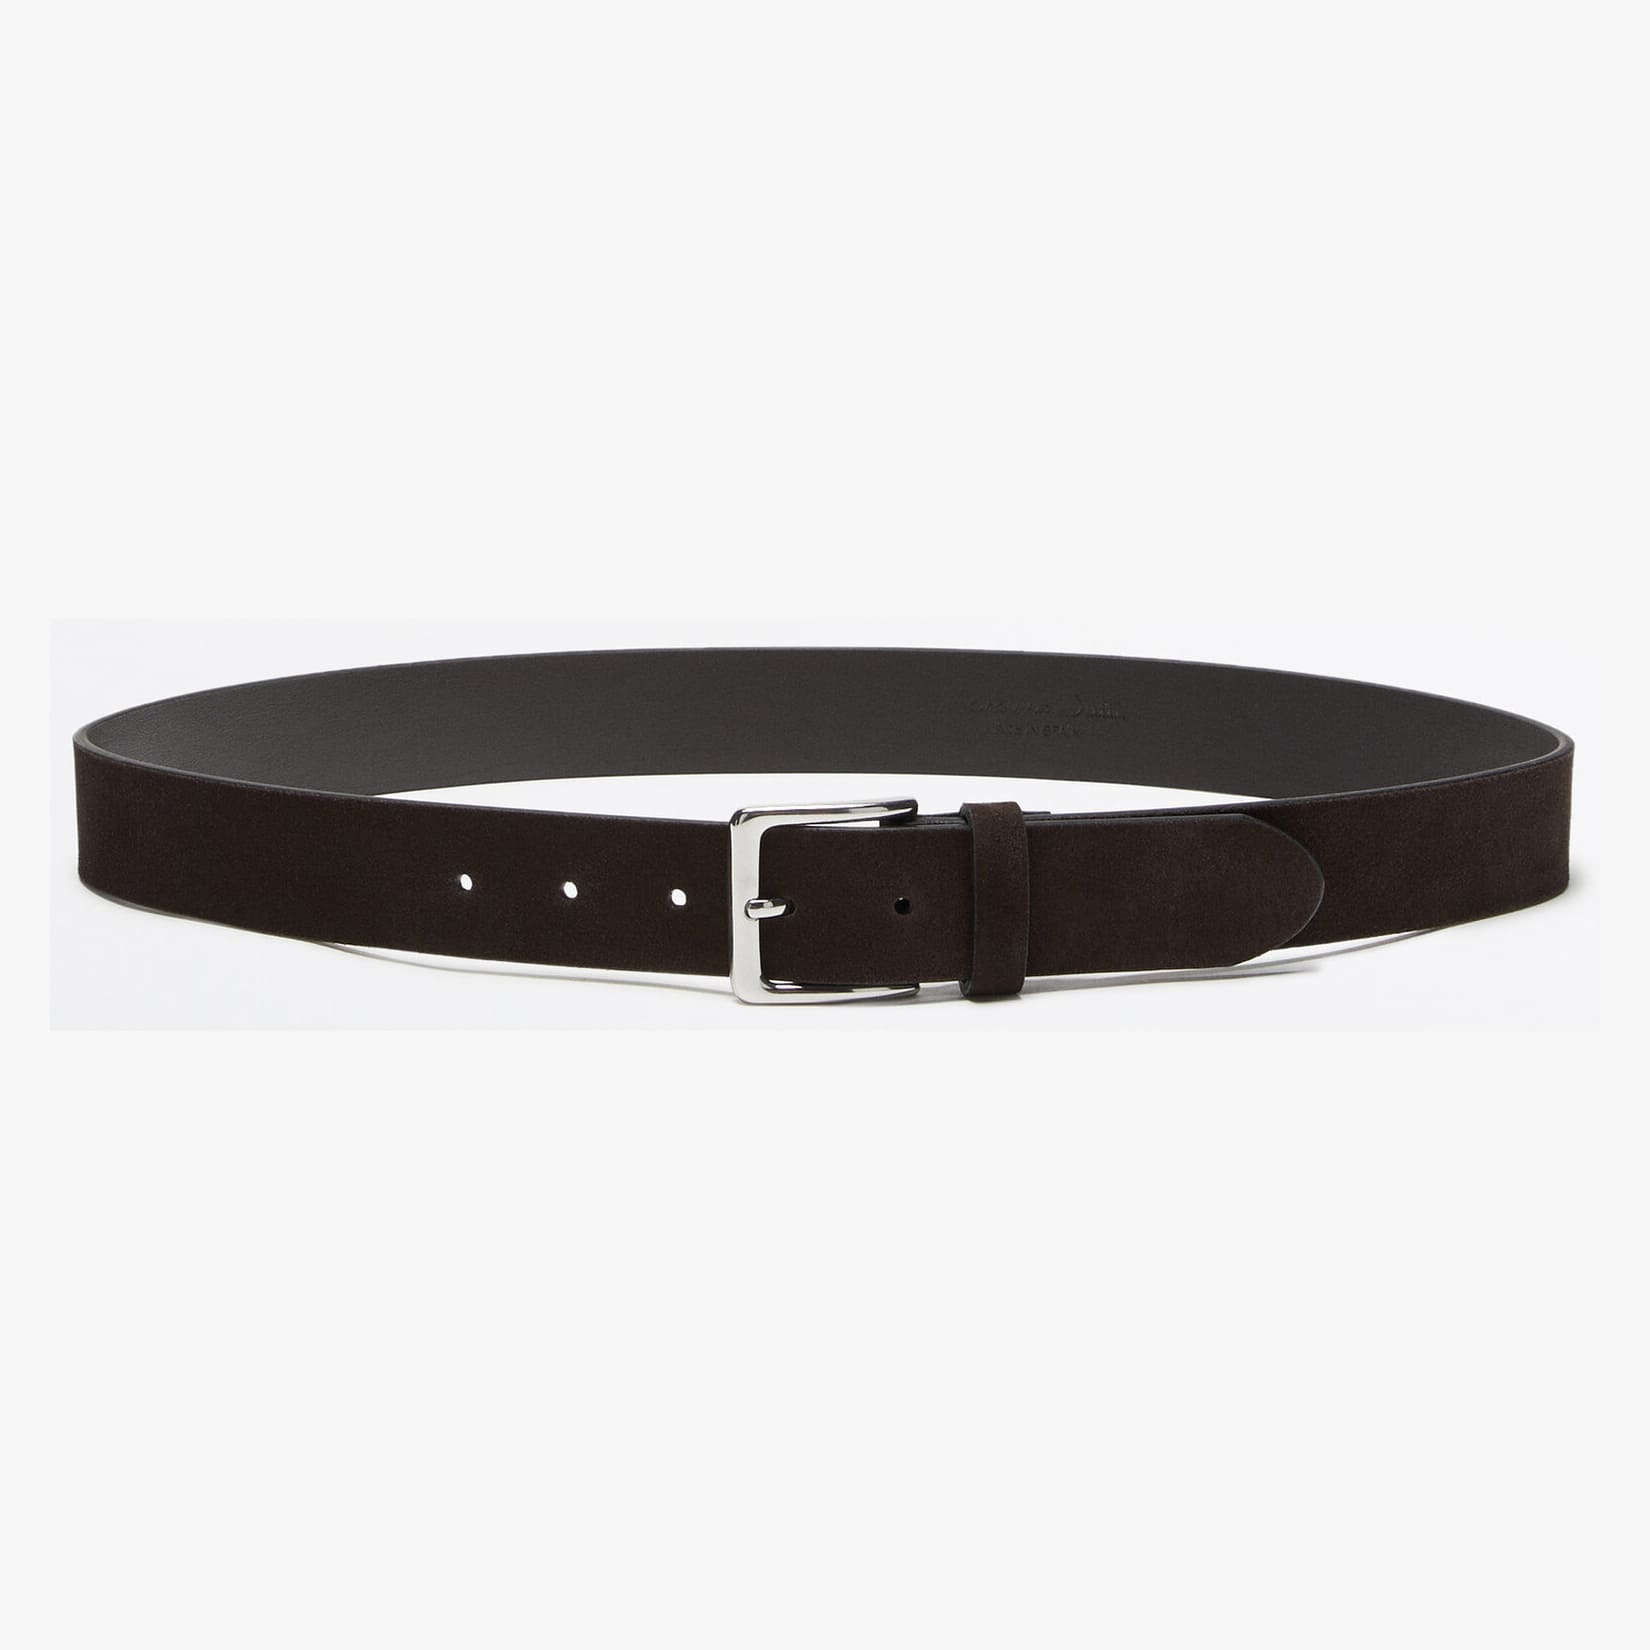 Ремень Massimo Dutti Suede Leather, темно-коричневый ремень massimo dutti leather belt thin limited edition чёрный